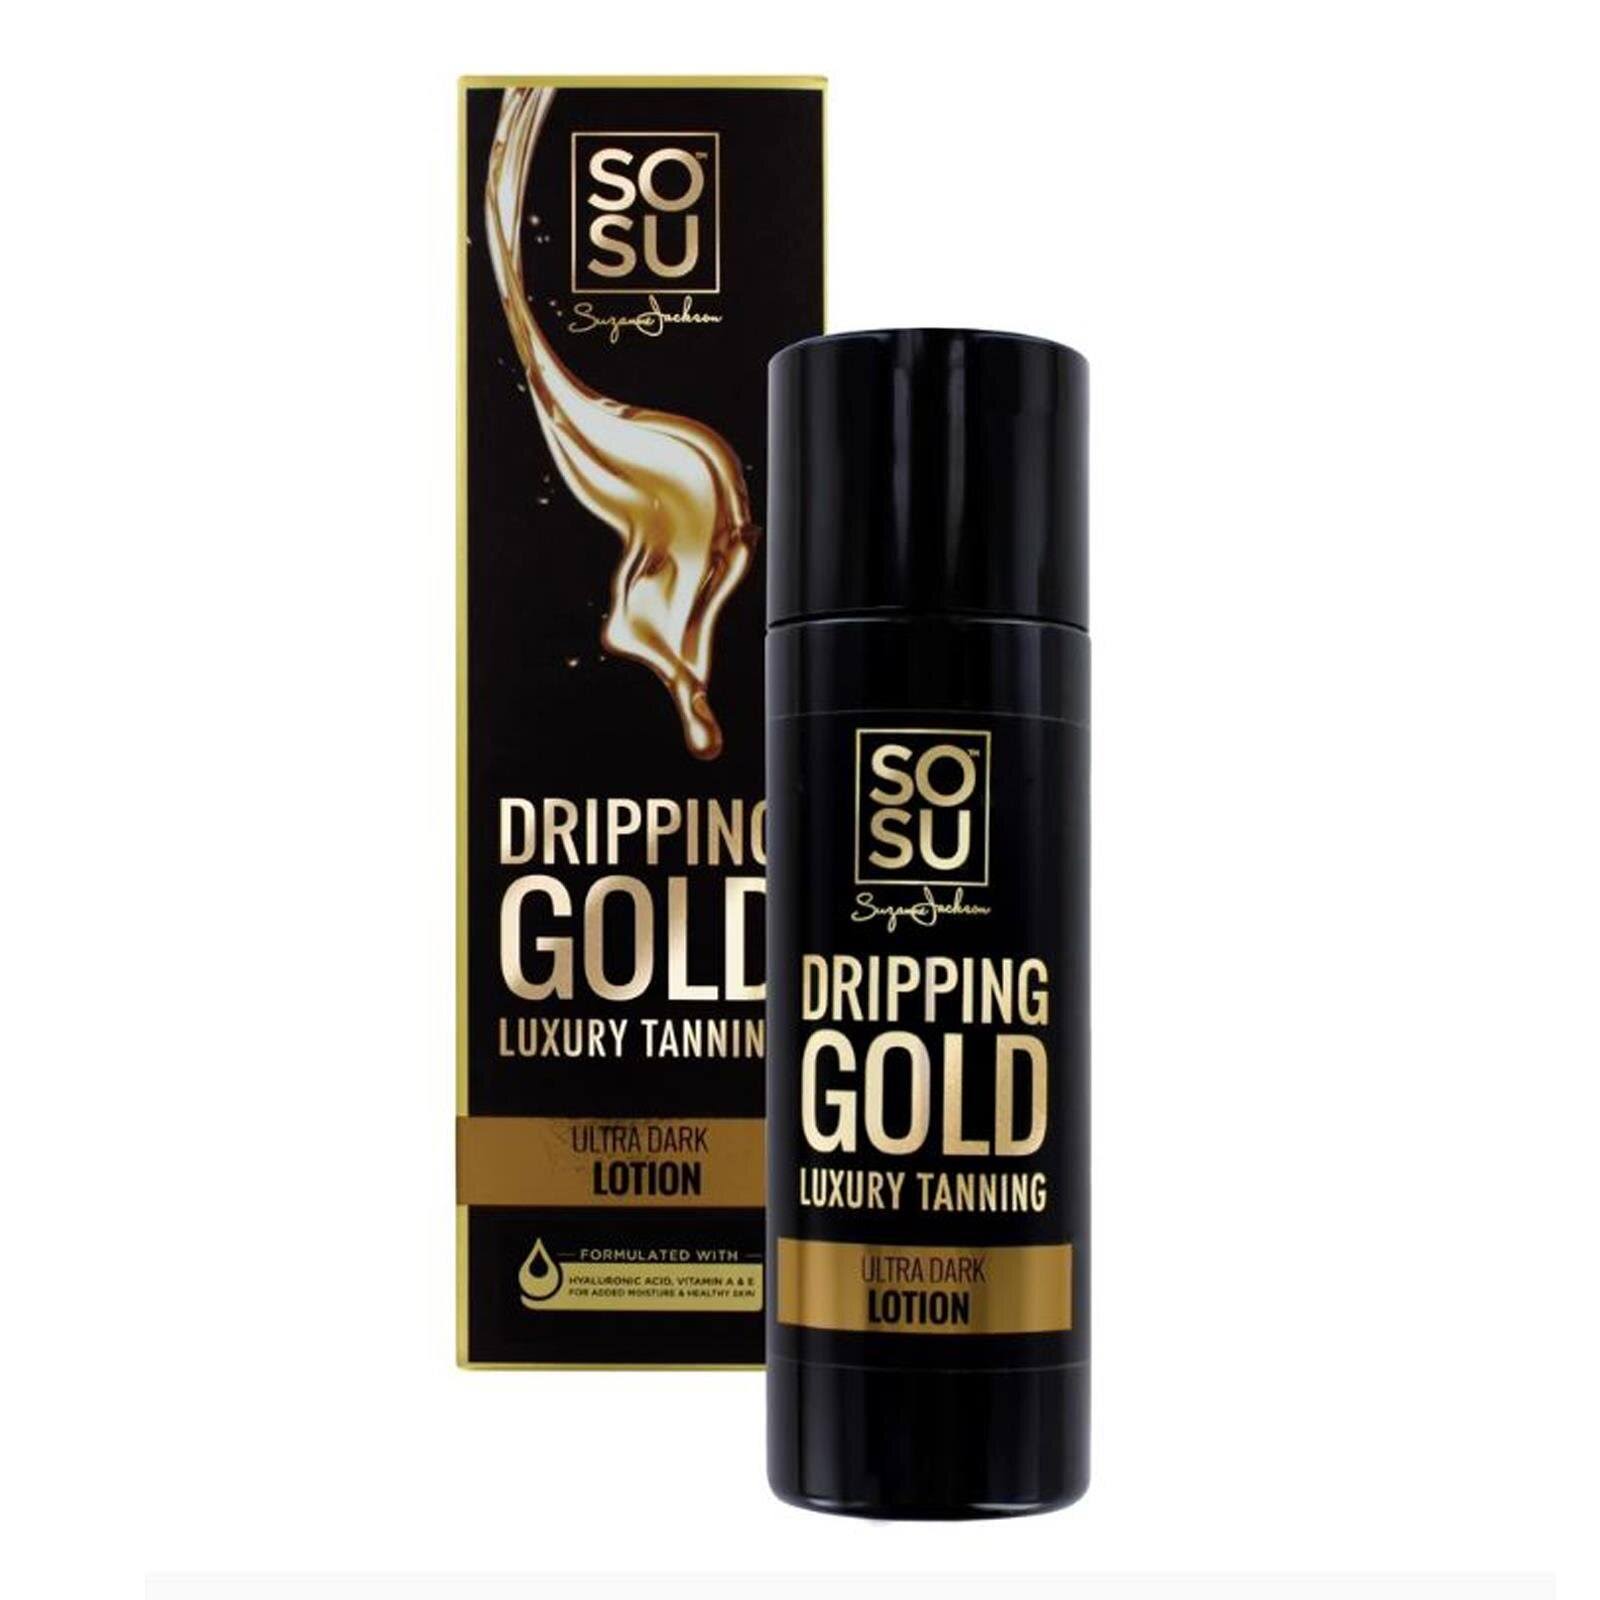 SOSU Dripping Gold Luxury Tanning Lotion Ultra Dark